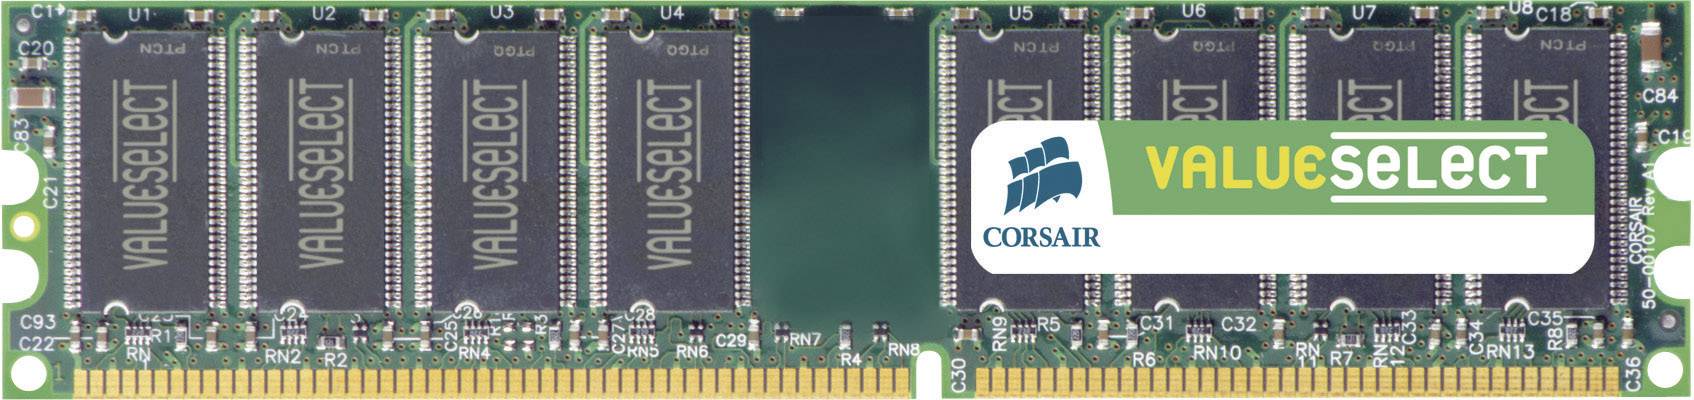 K9ND Master-S4R/A4R OFFTEK 512MB Replacement RAM Memory for Microstar MSI Motherboard Memory DDR2-5300 - Reg 